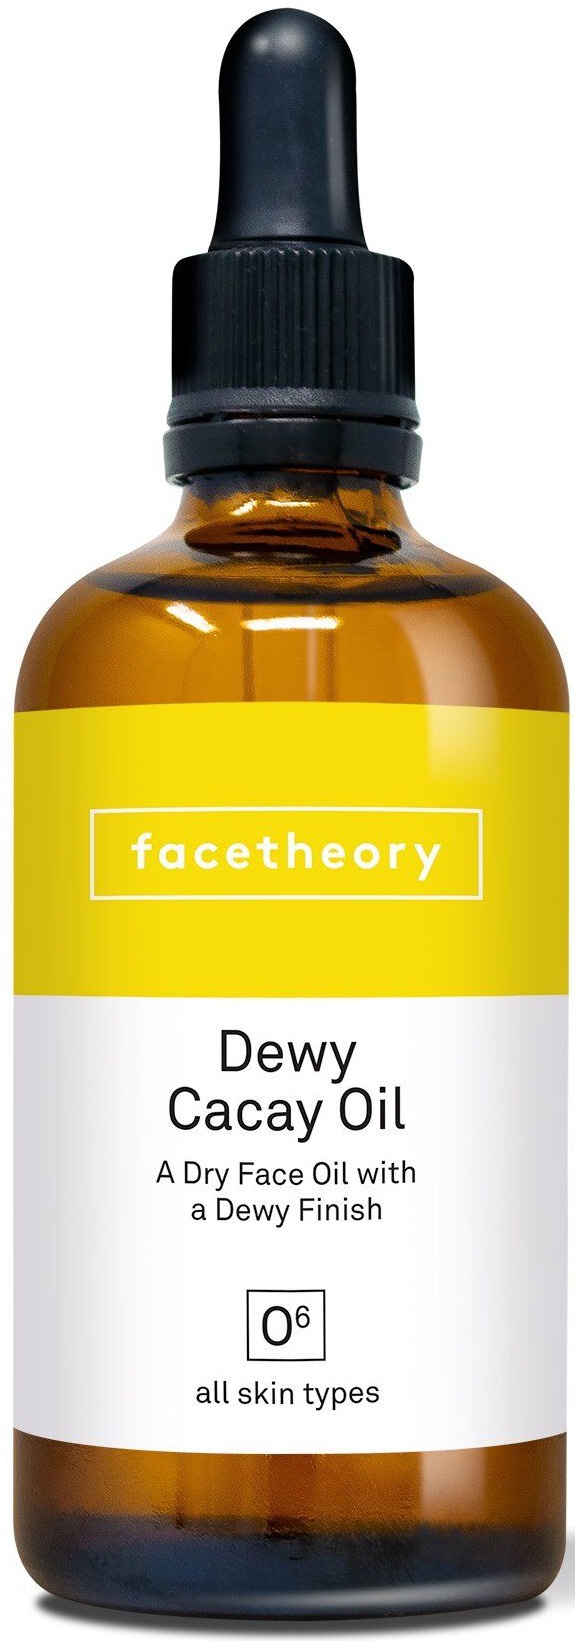 facetheory Dewy Cacay Oil O6